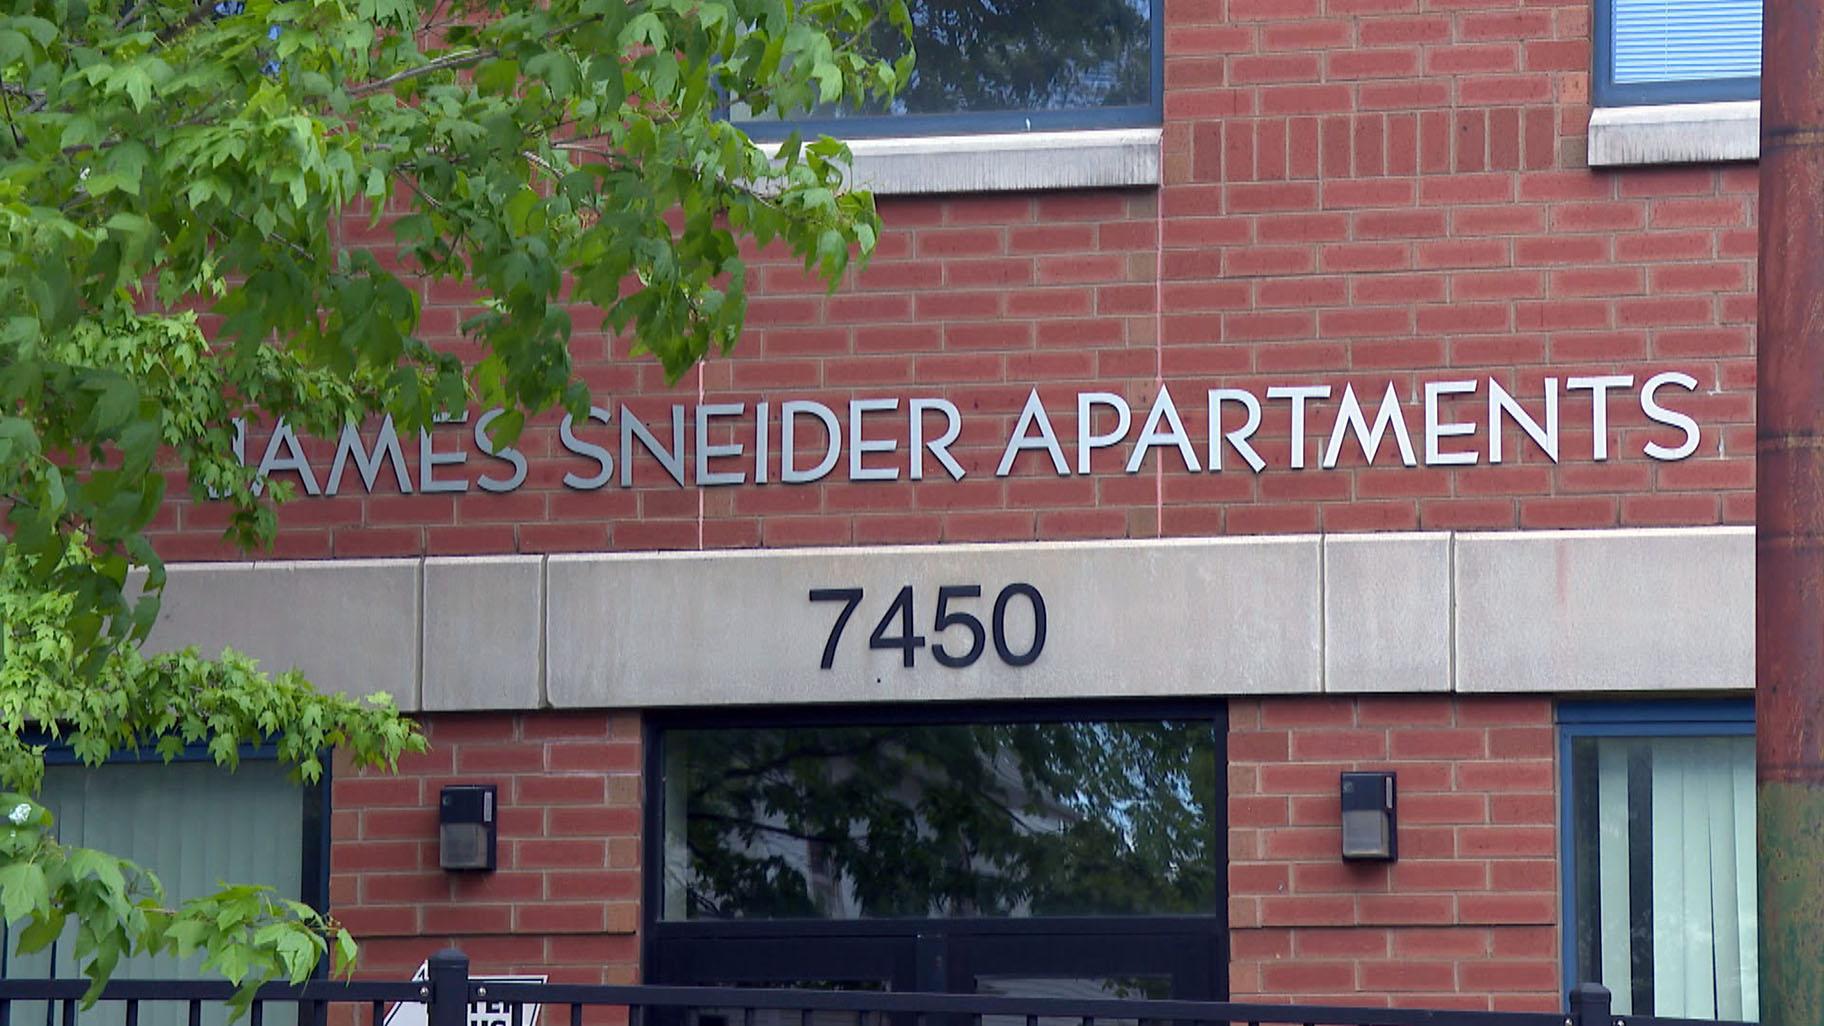 James Sneider Apartments (WTTW News)